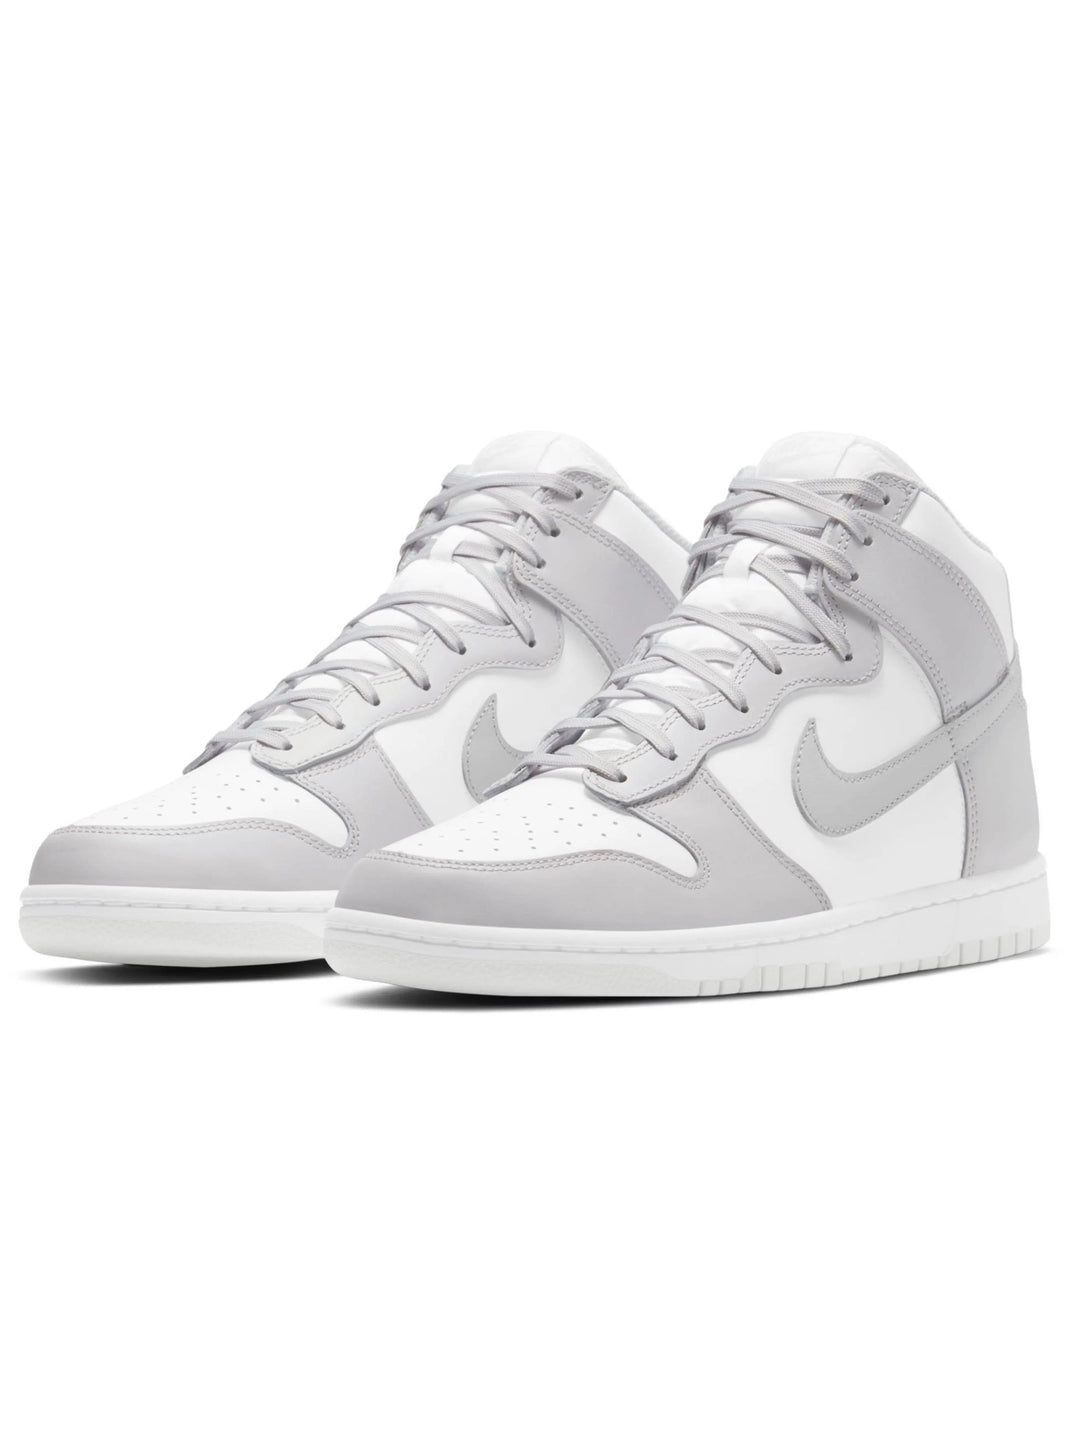 Nike Dunk High White Vast Grey [2021] Prior